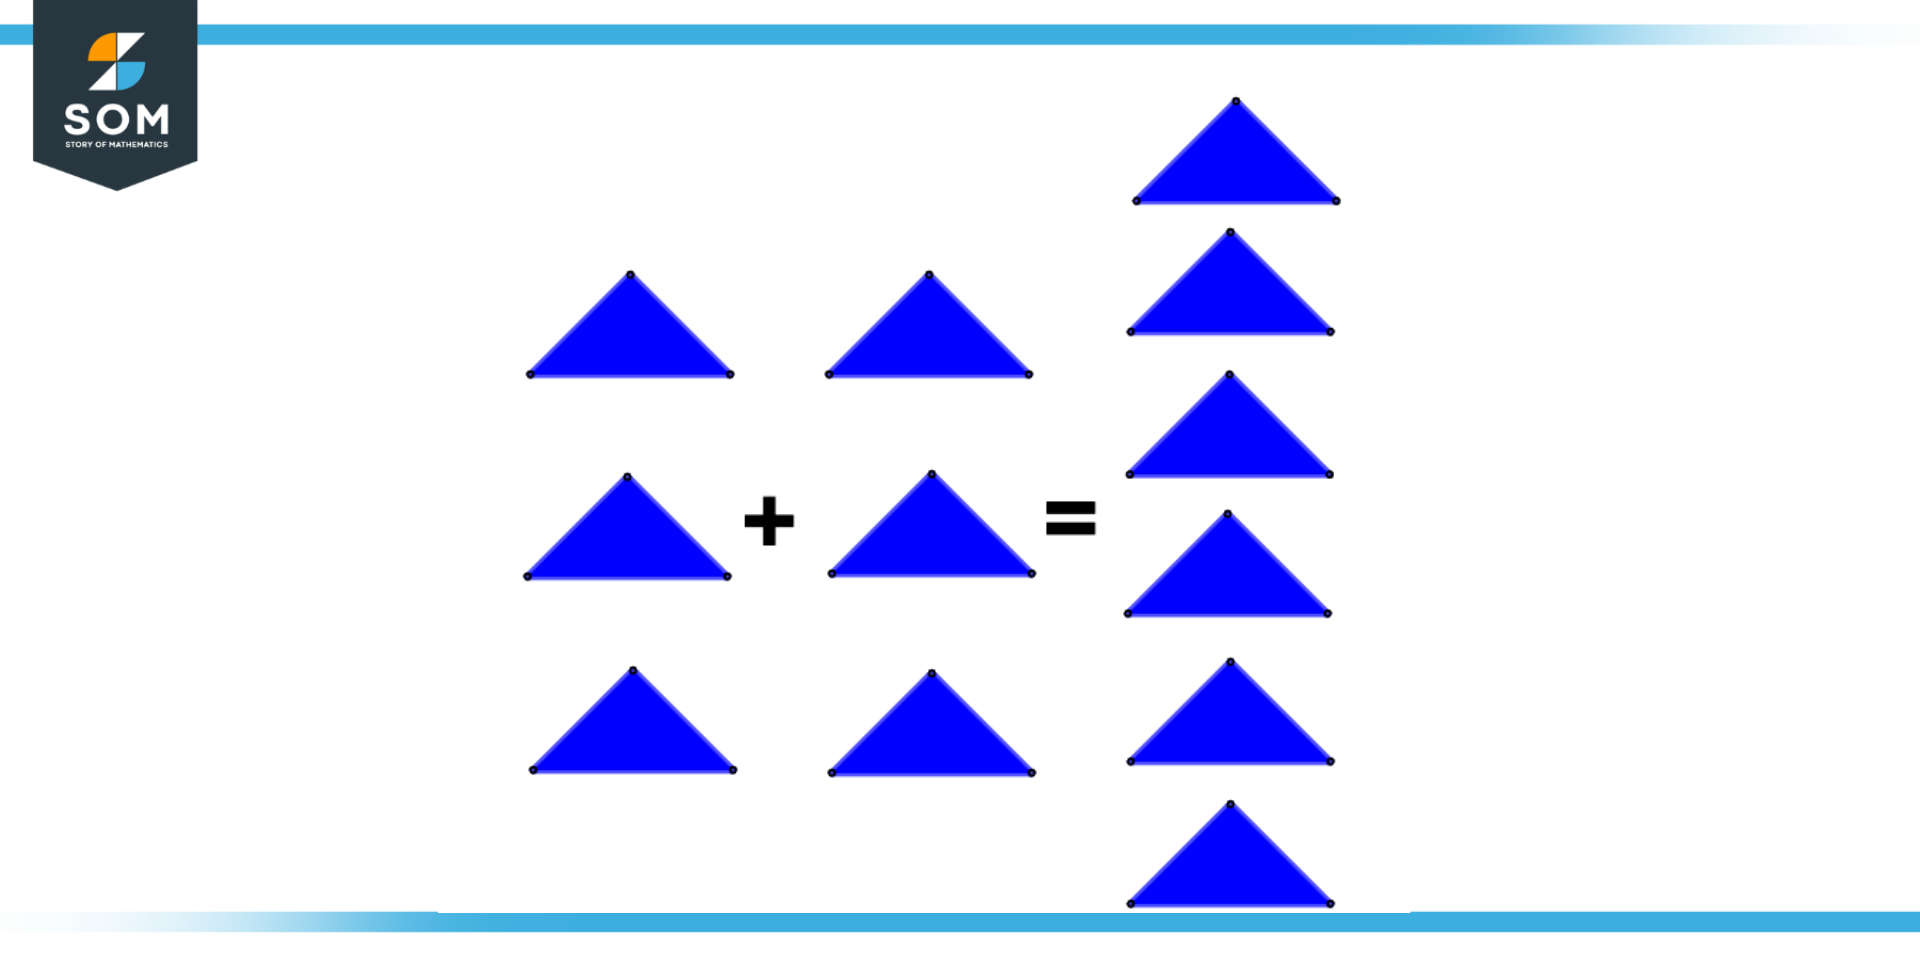 Summing Triangles